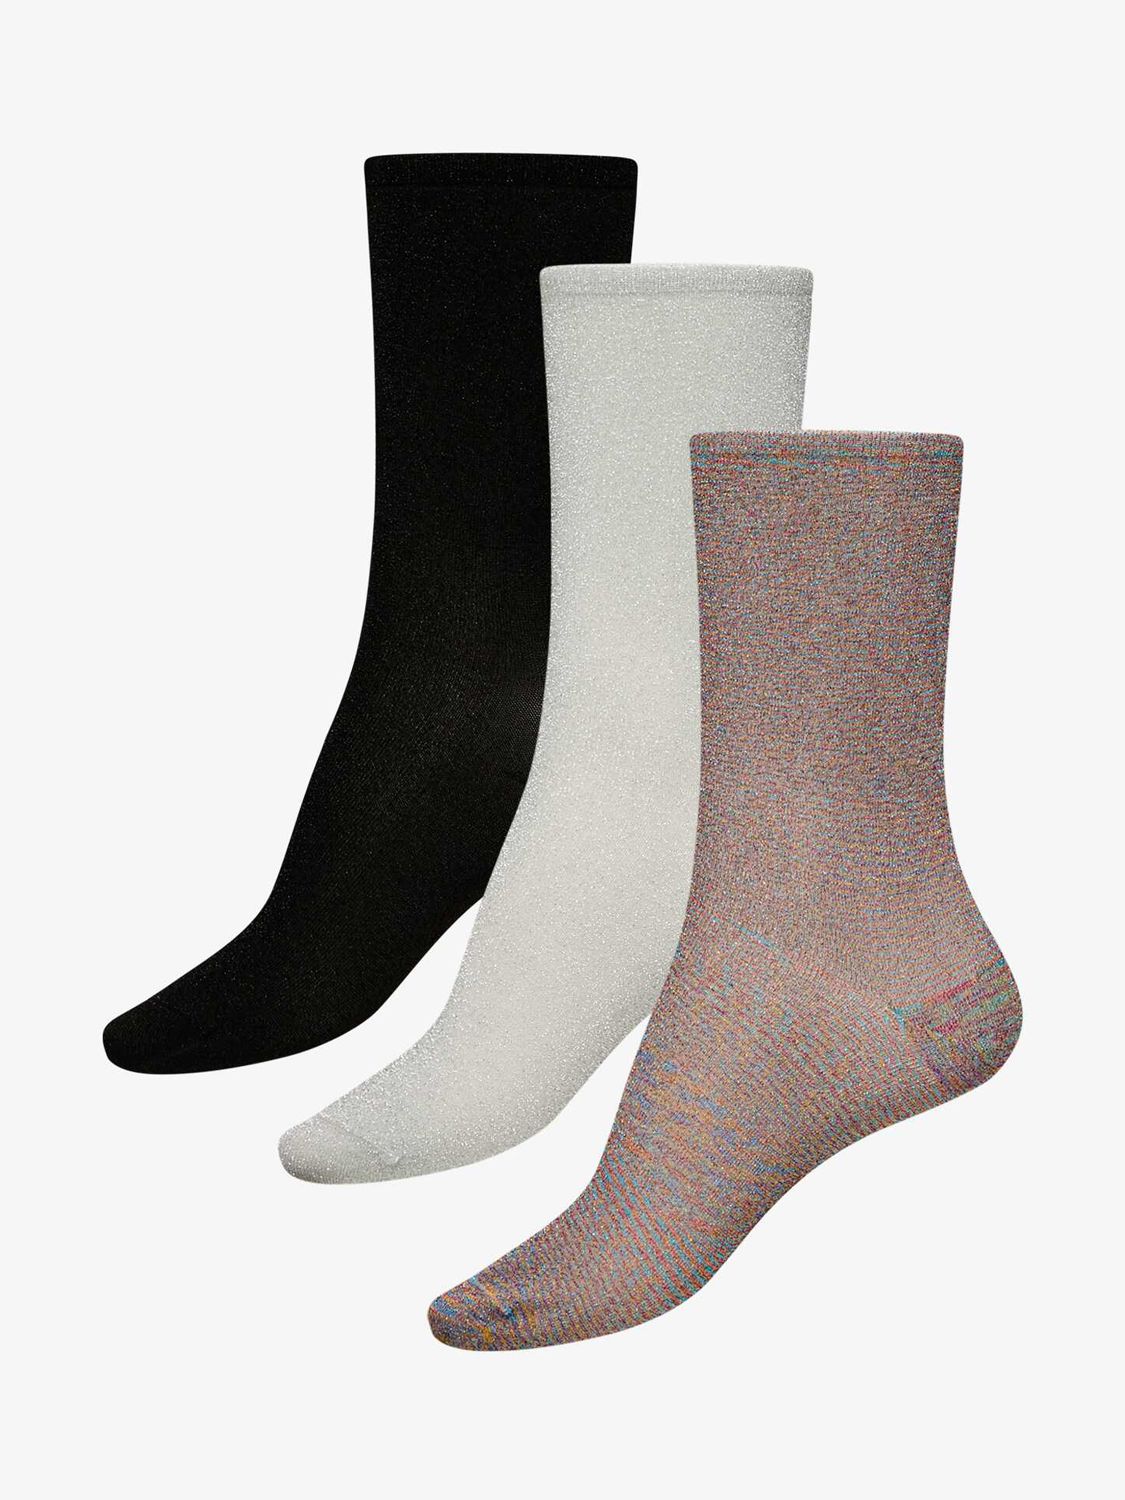 Unmade Copenhagen Stardust Ankle Socks, Pack 3, Silver/Multi John Lewis & Partners